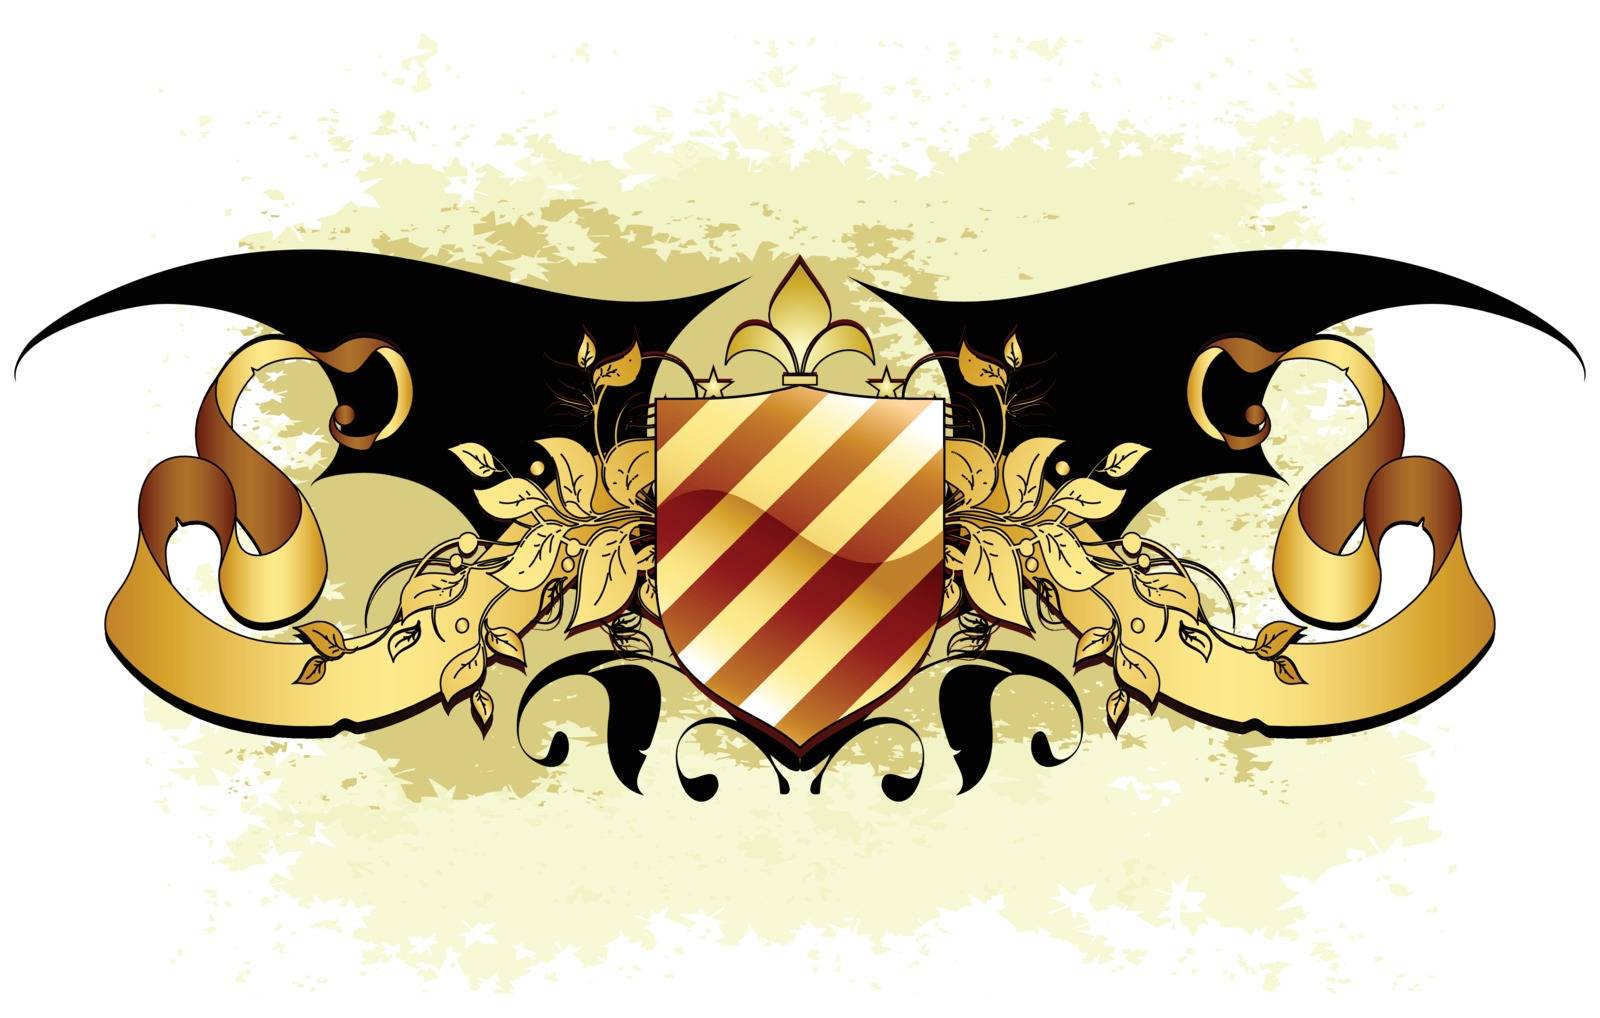 ornamental shield by kjolak